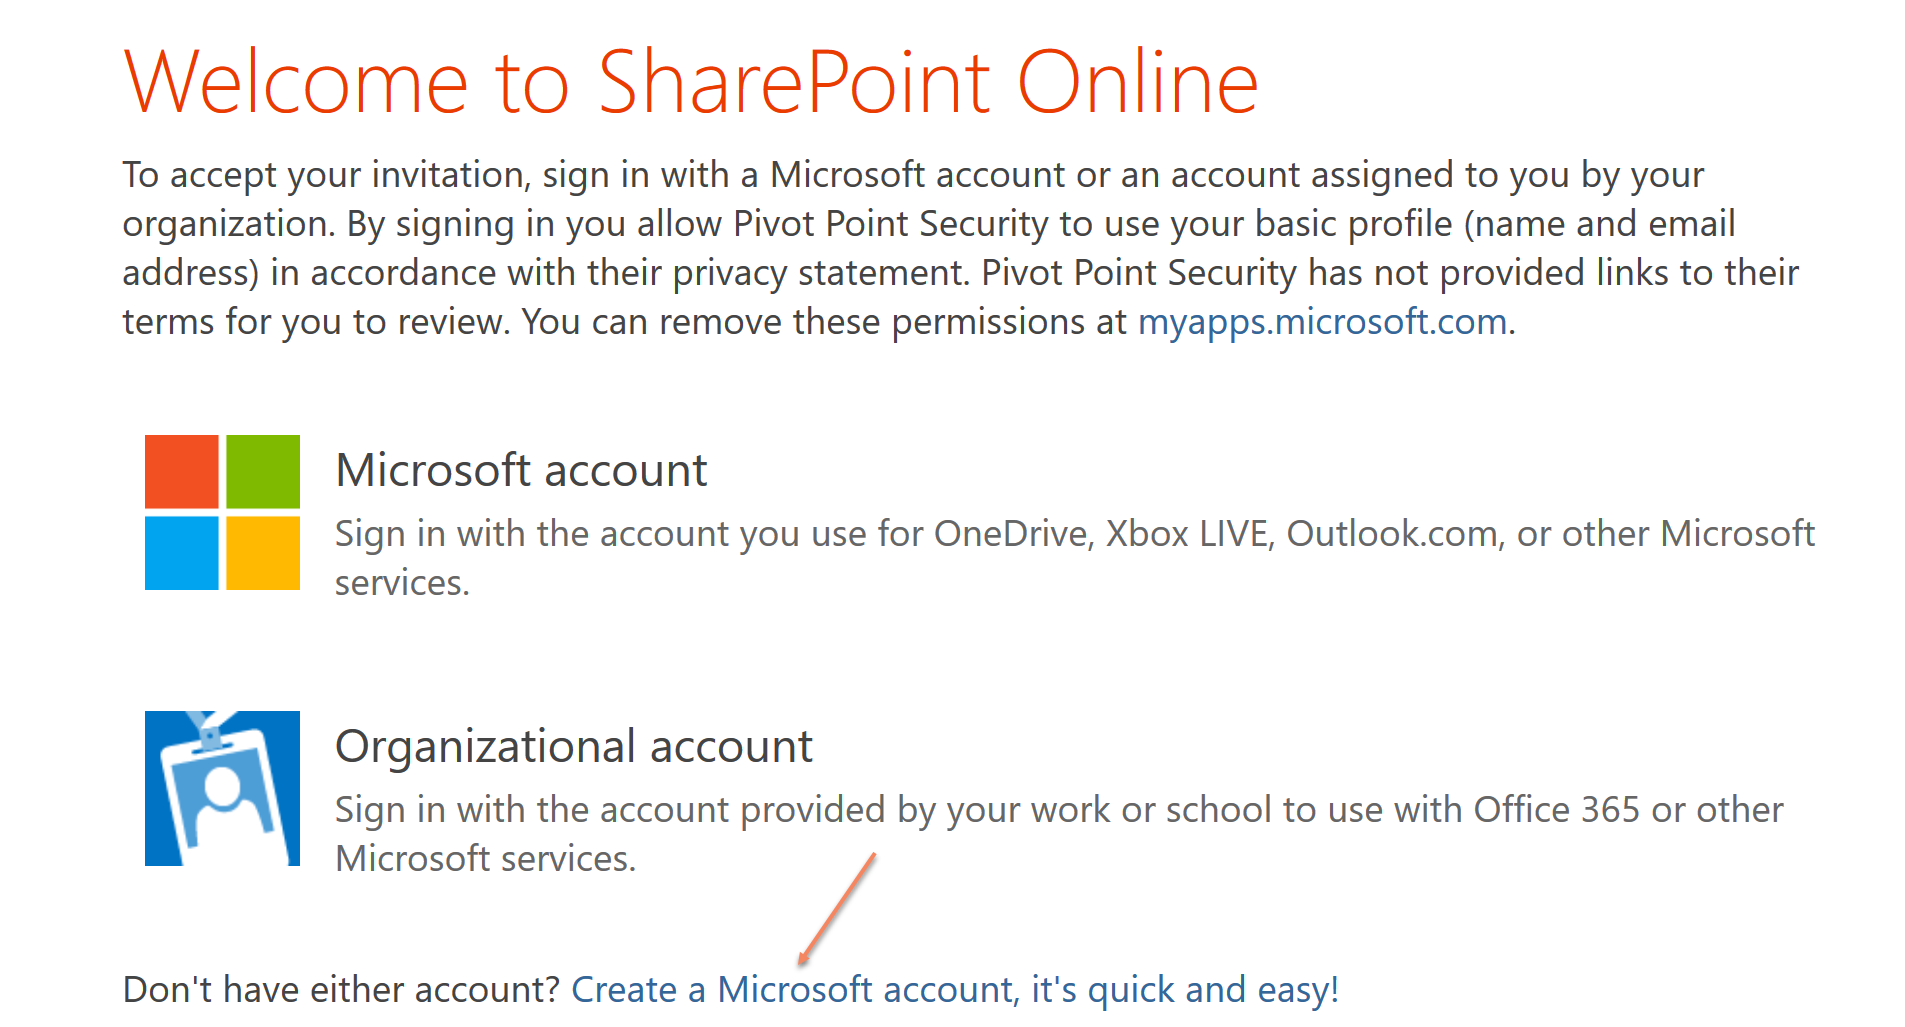 Click Create a Microsoft account to create an account